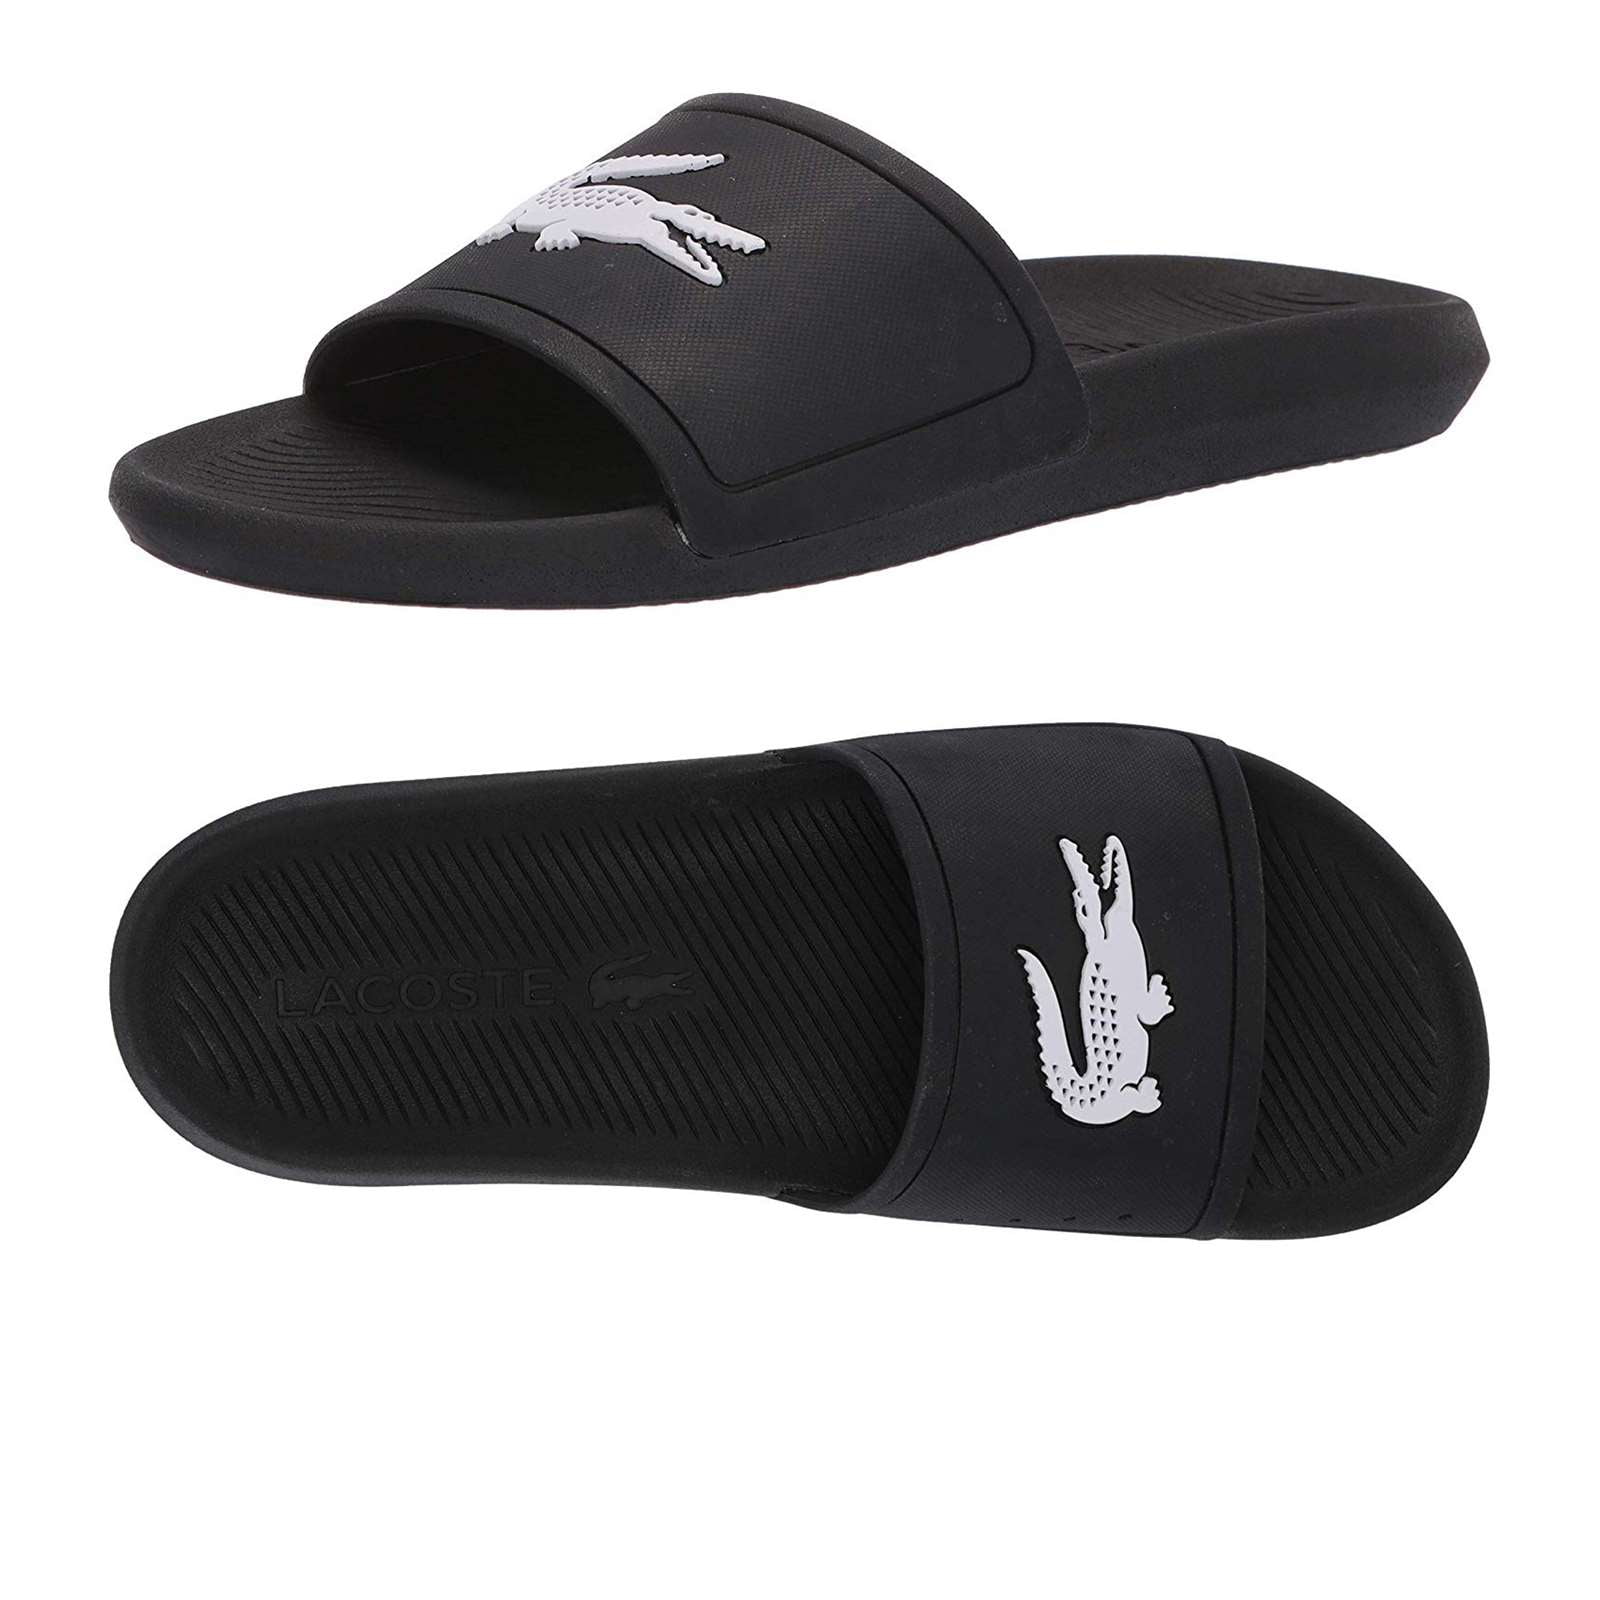 Lacoste Men's Croco Slide 119 1 CMA Open Toe Sandals